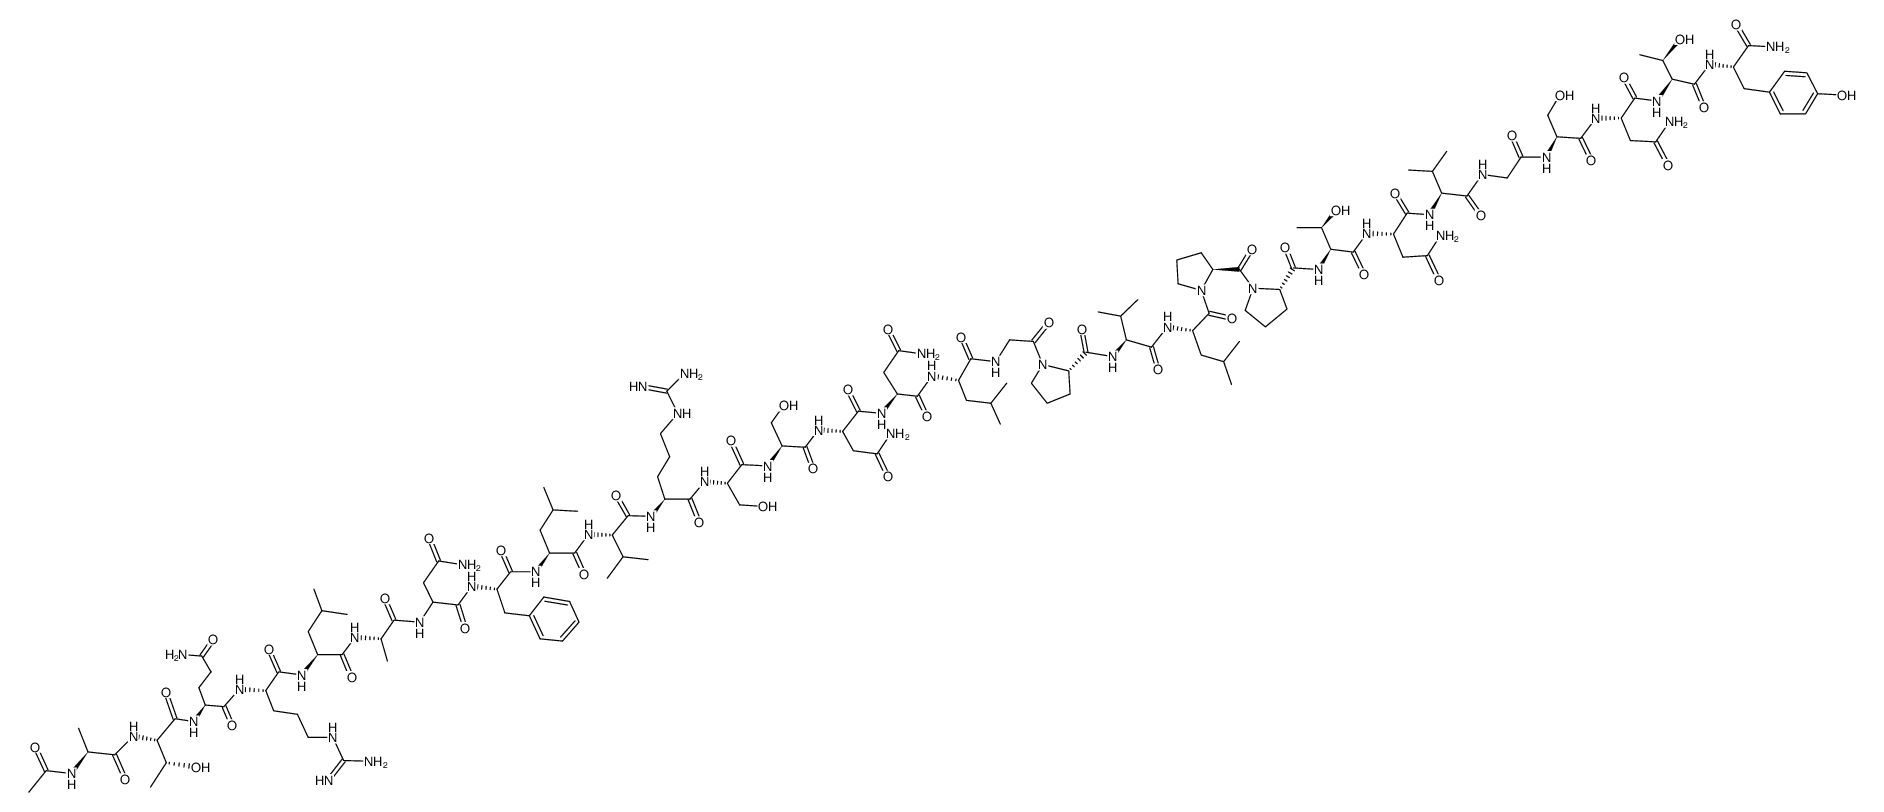 Acetyl-Amylin (8-37) (mouse, rat) structure